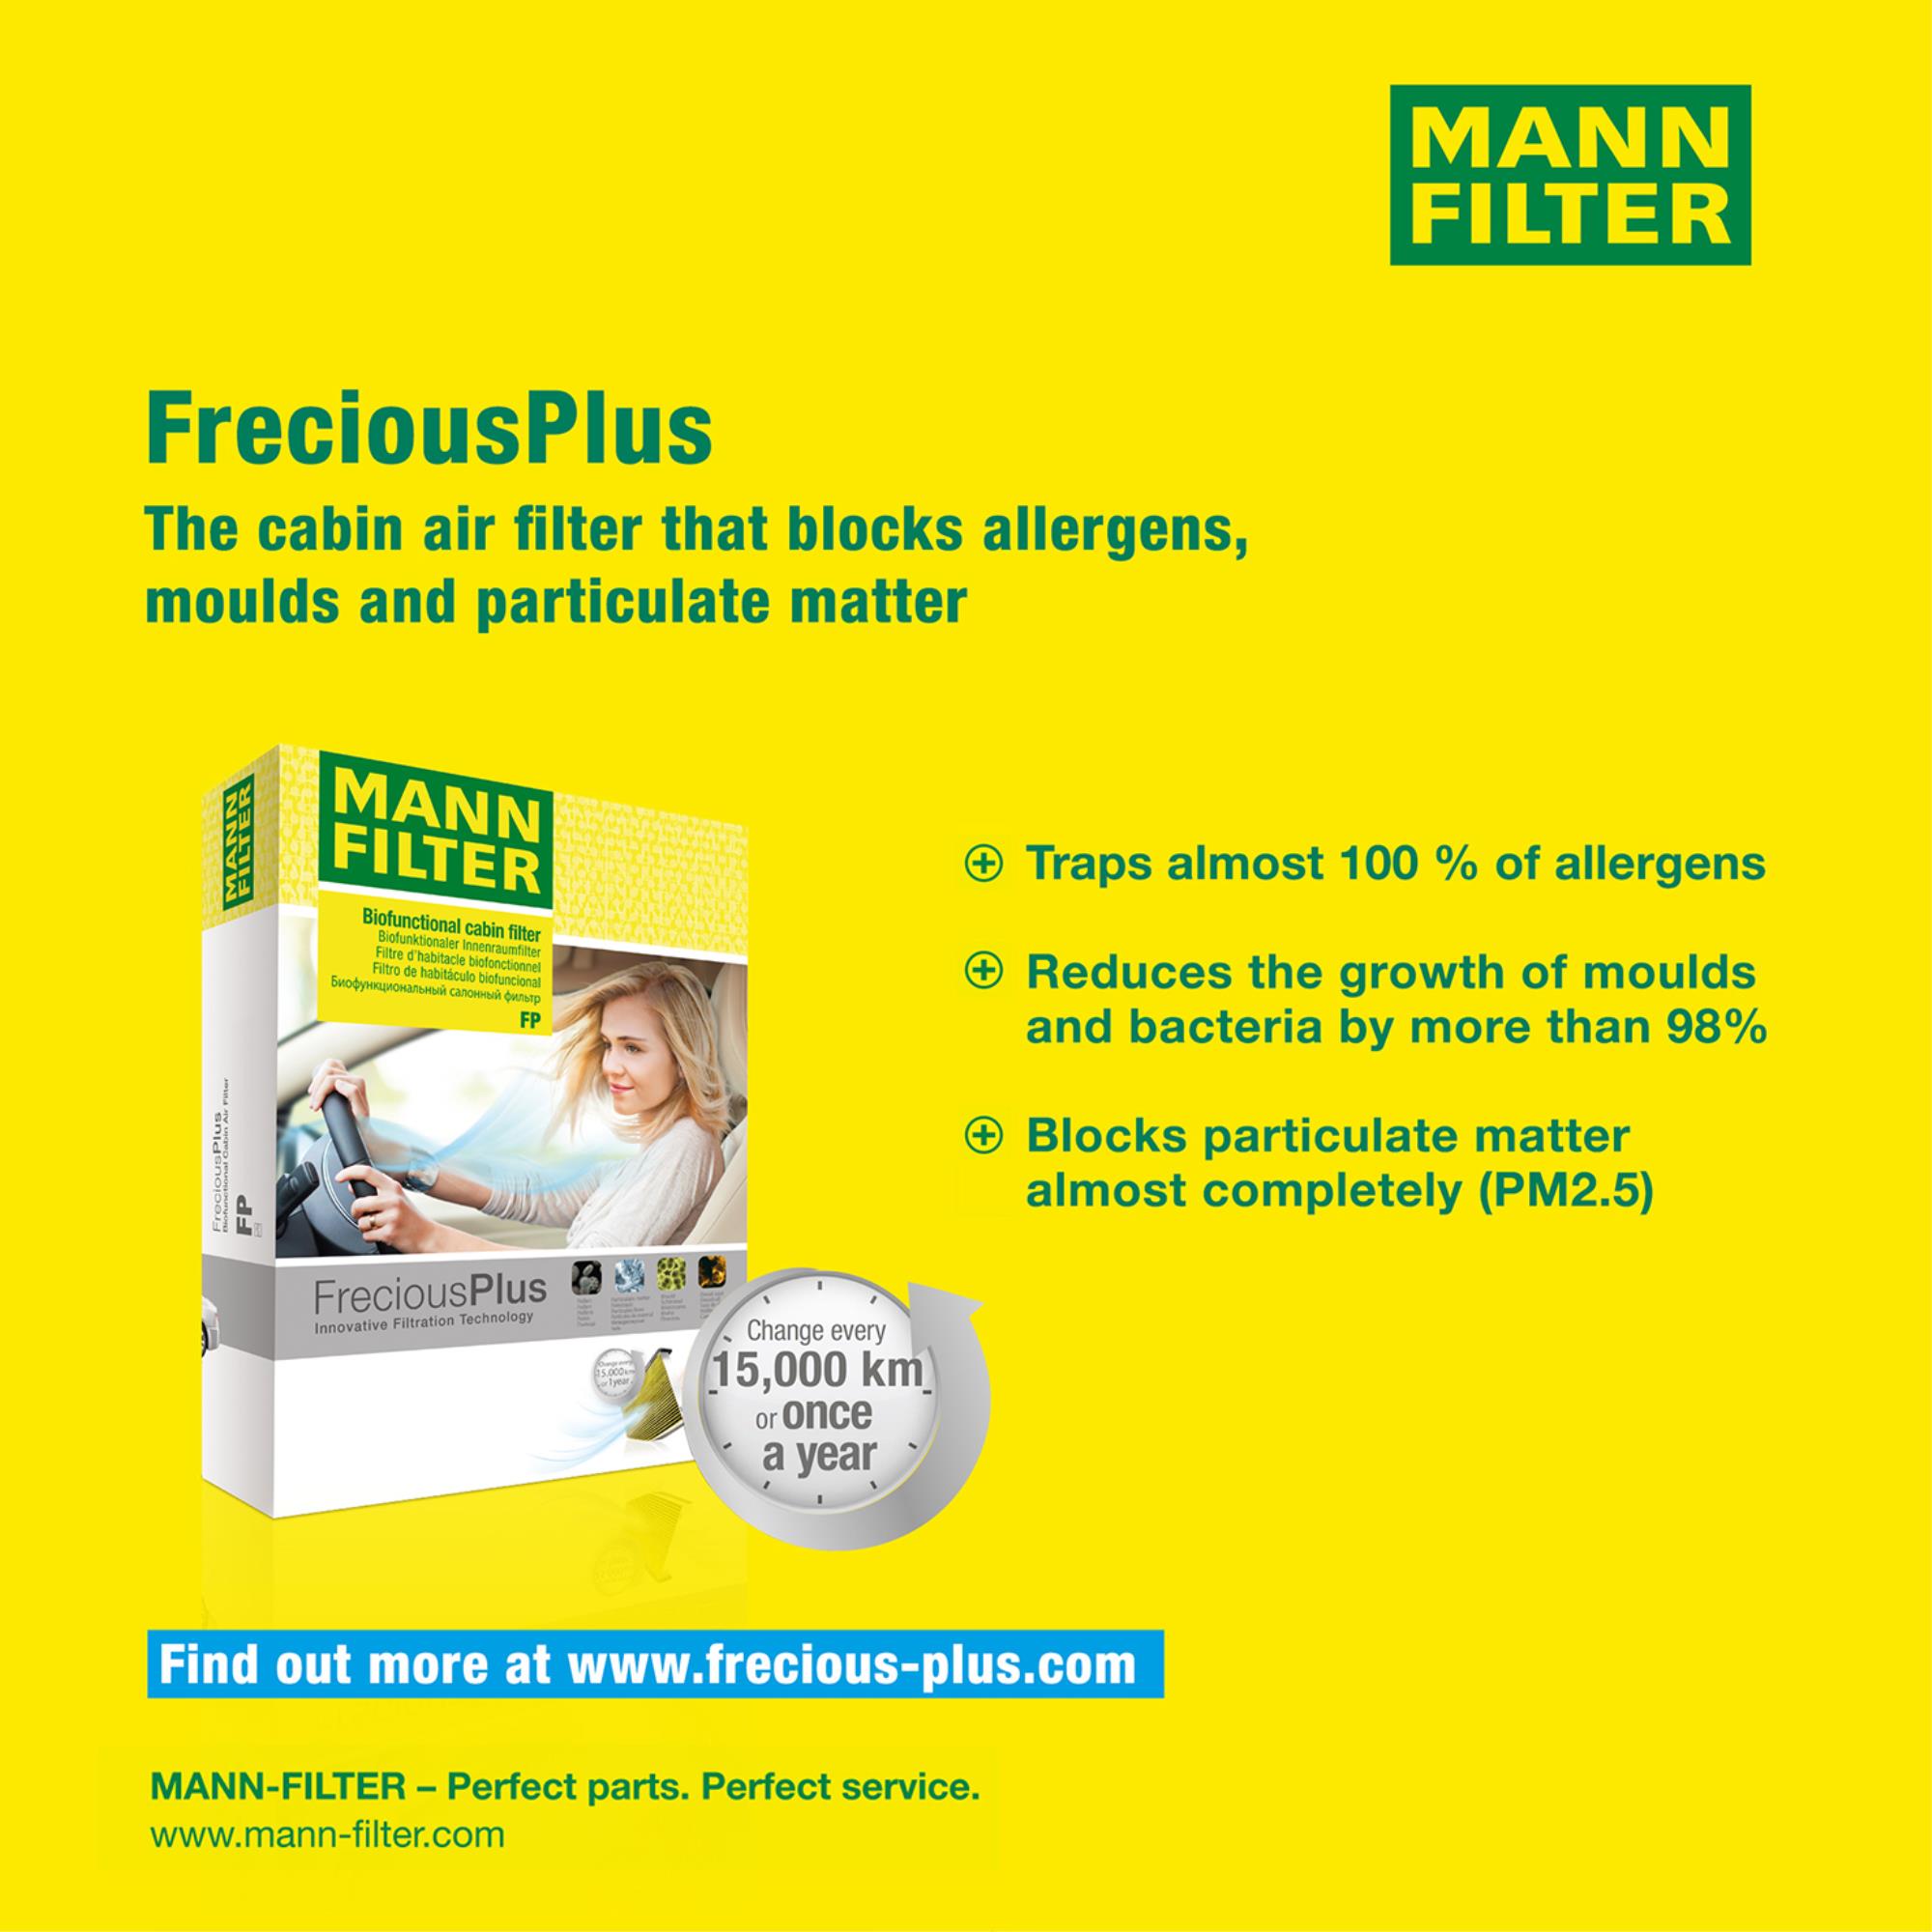 MANN-Filter Innenraumfilter Biofunctional für Allergiker FP 2939/1